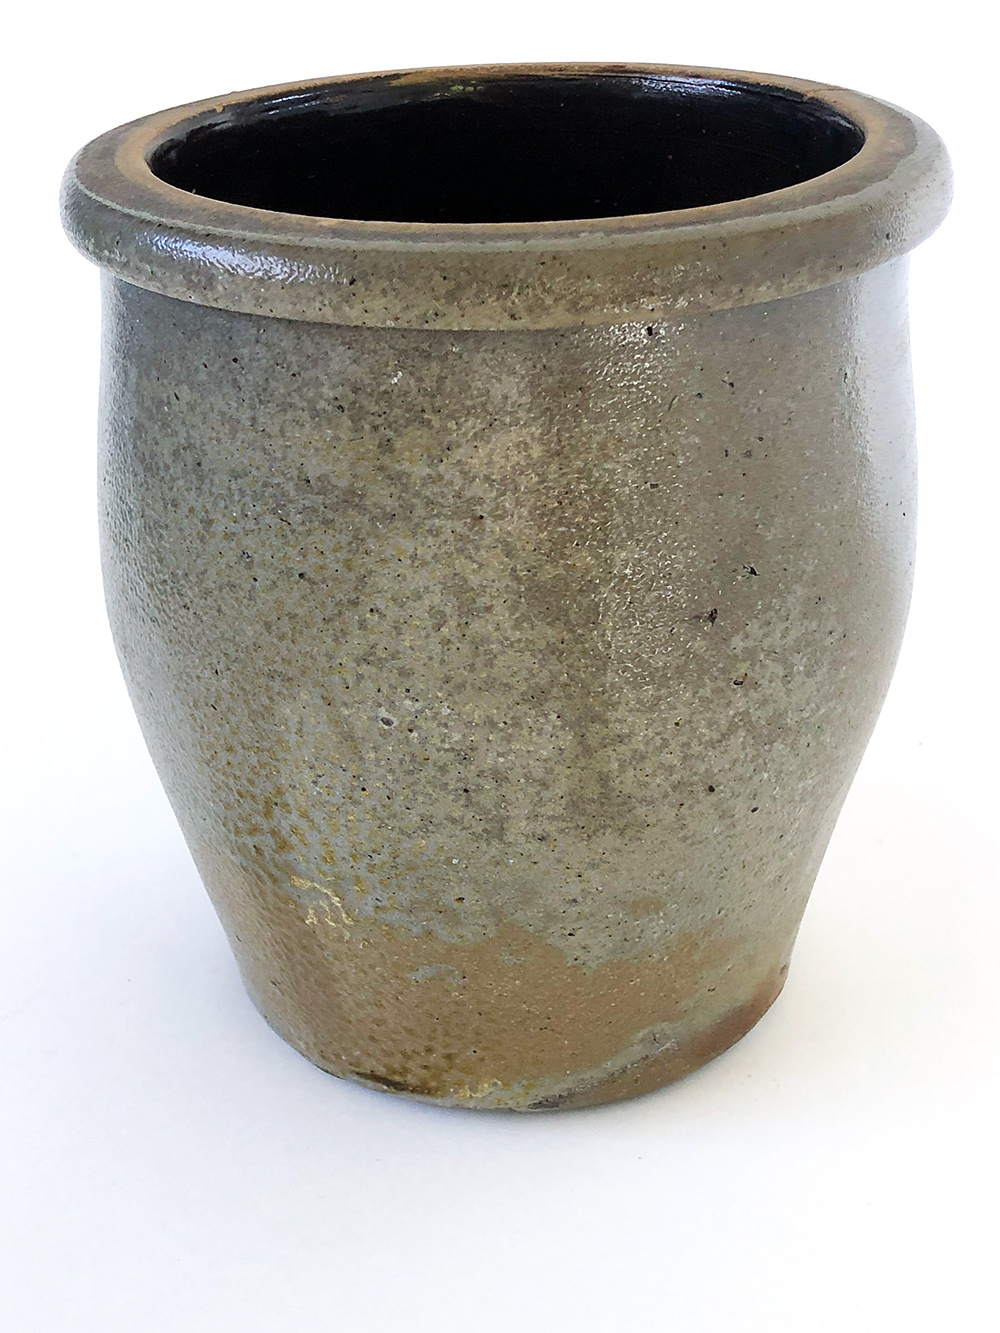 Wheeling West Virginia blue decorated stoneware merchant jar 